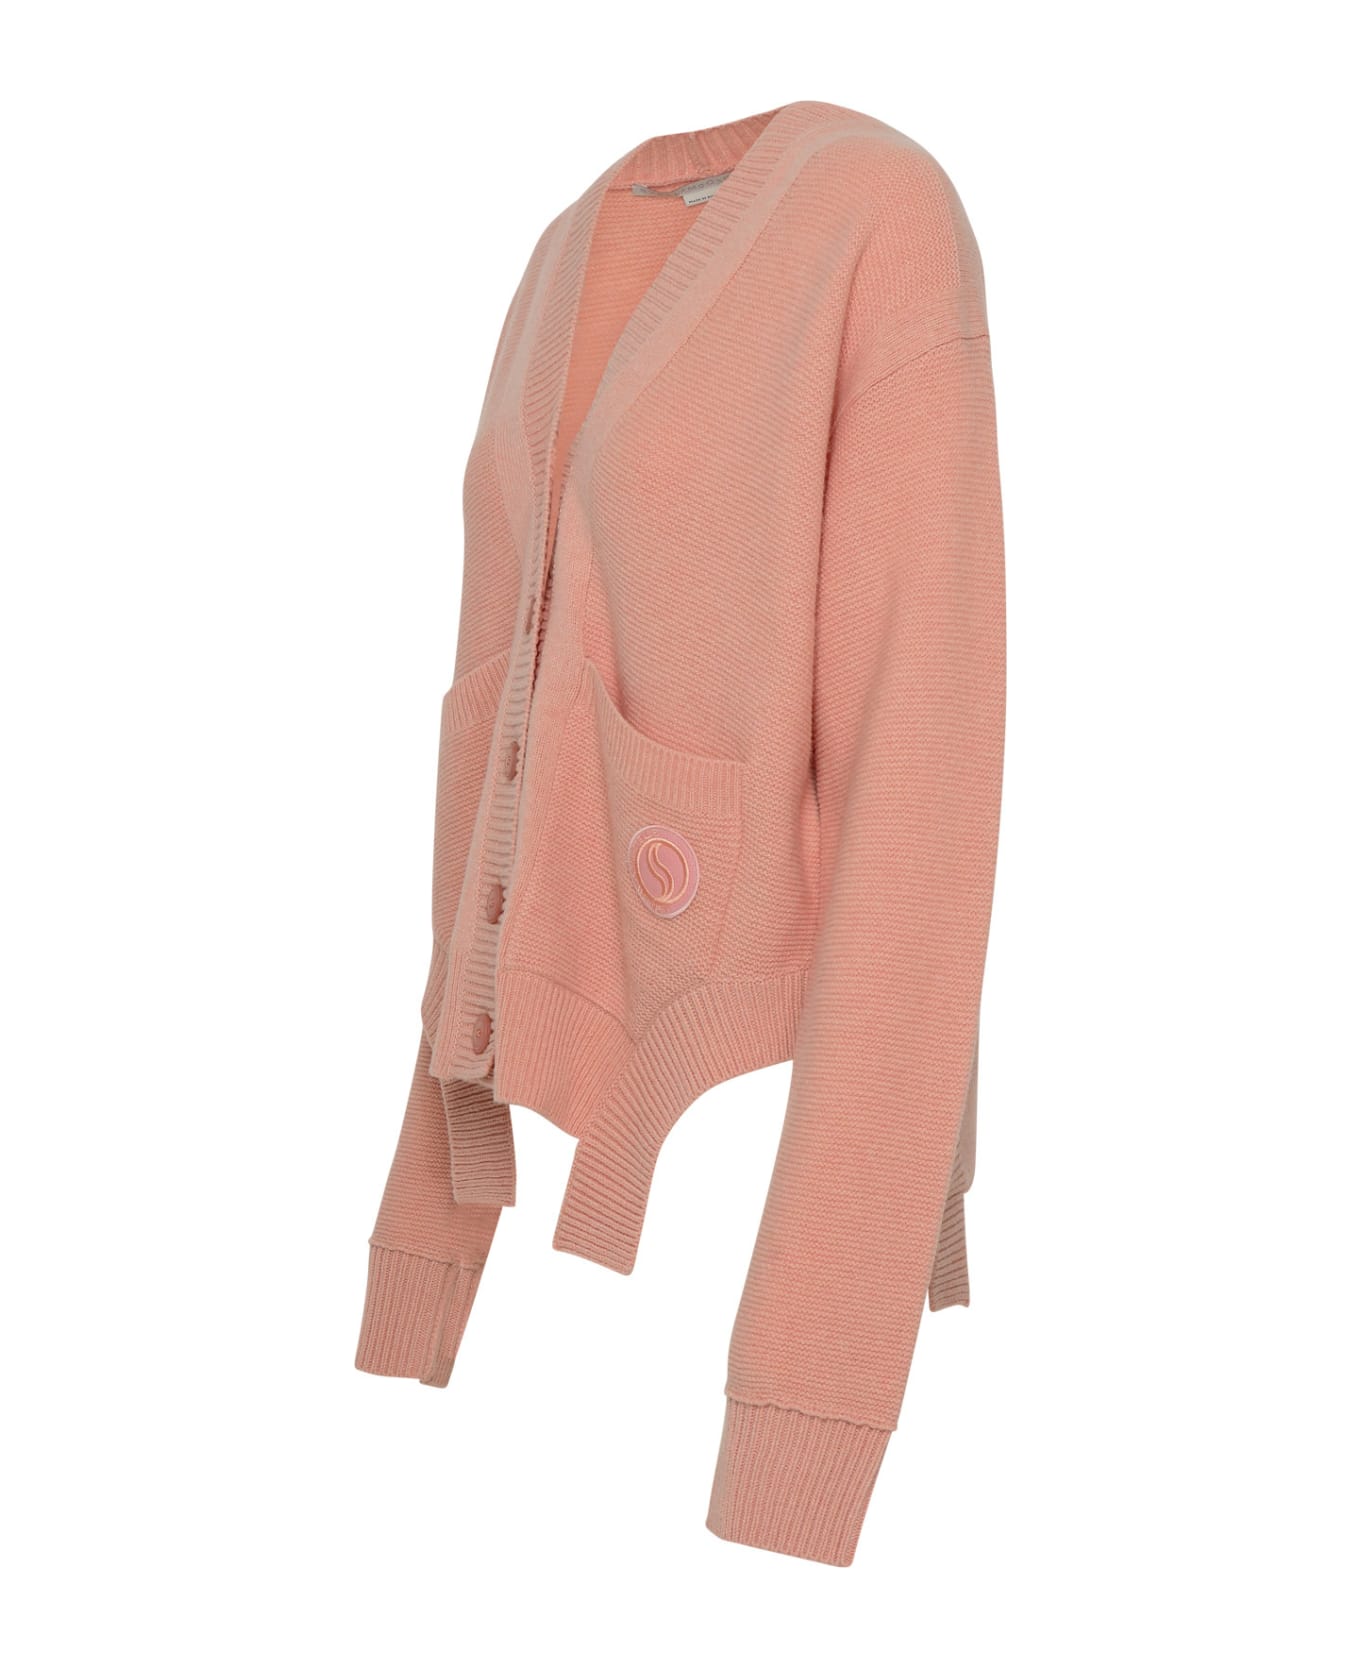 Stella McCartney Pink Cashmere Blend S Wave Cardigan - Pink